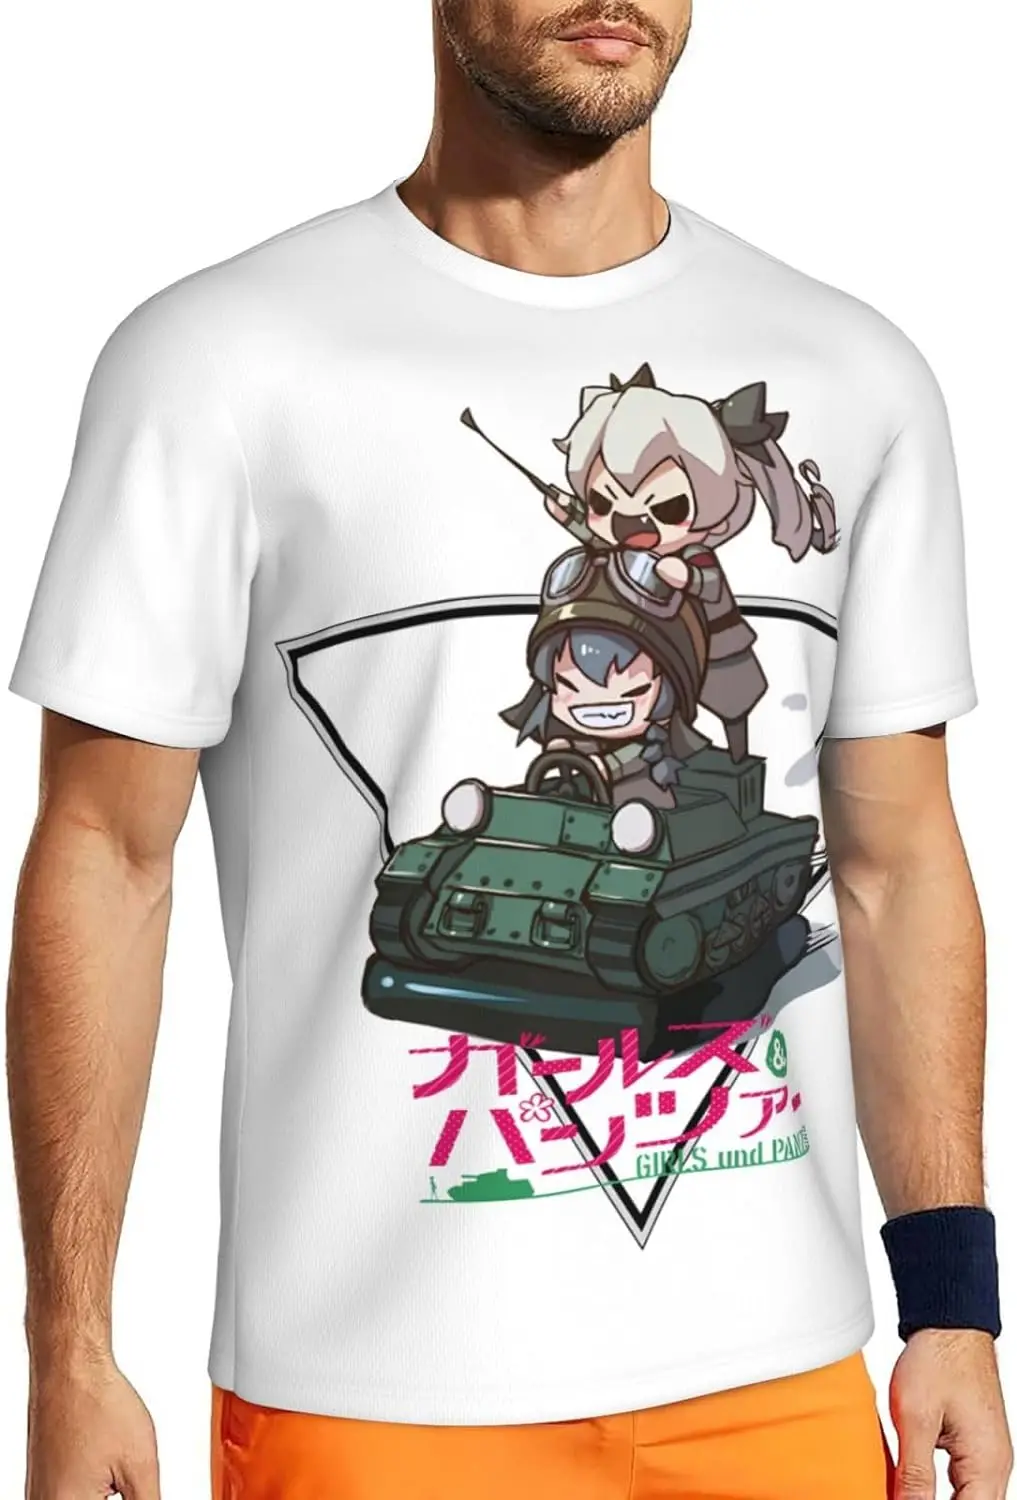 

Anime Girls Und Panzer T Shirt Mens Summer O-Neck Tops Casual Short Sleeves Tee